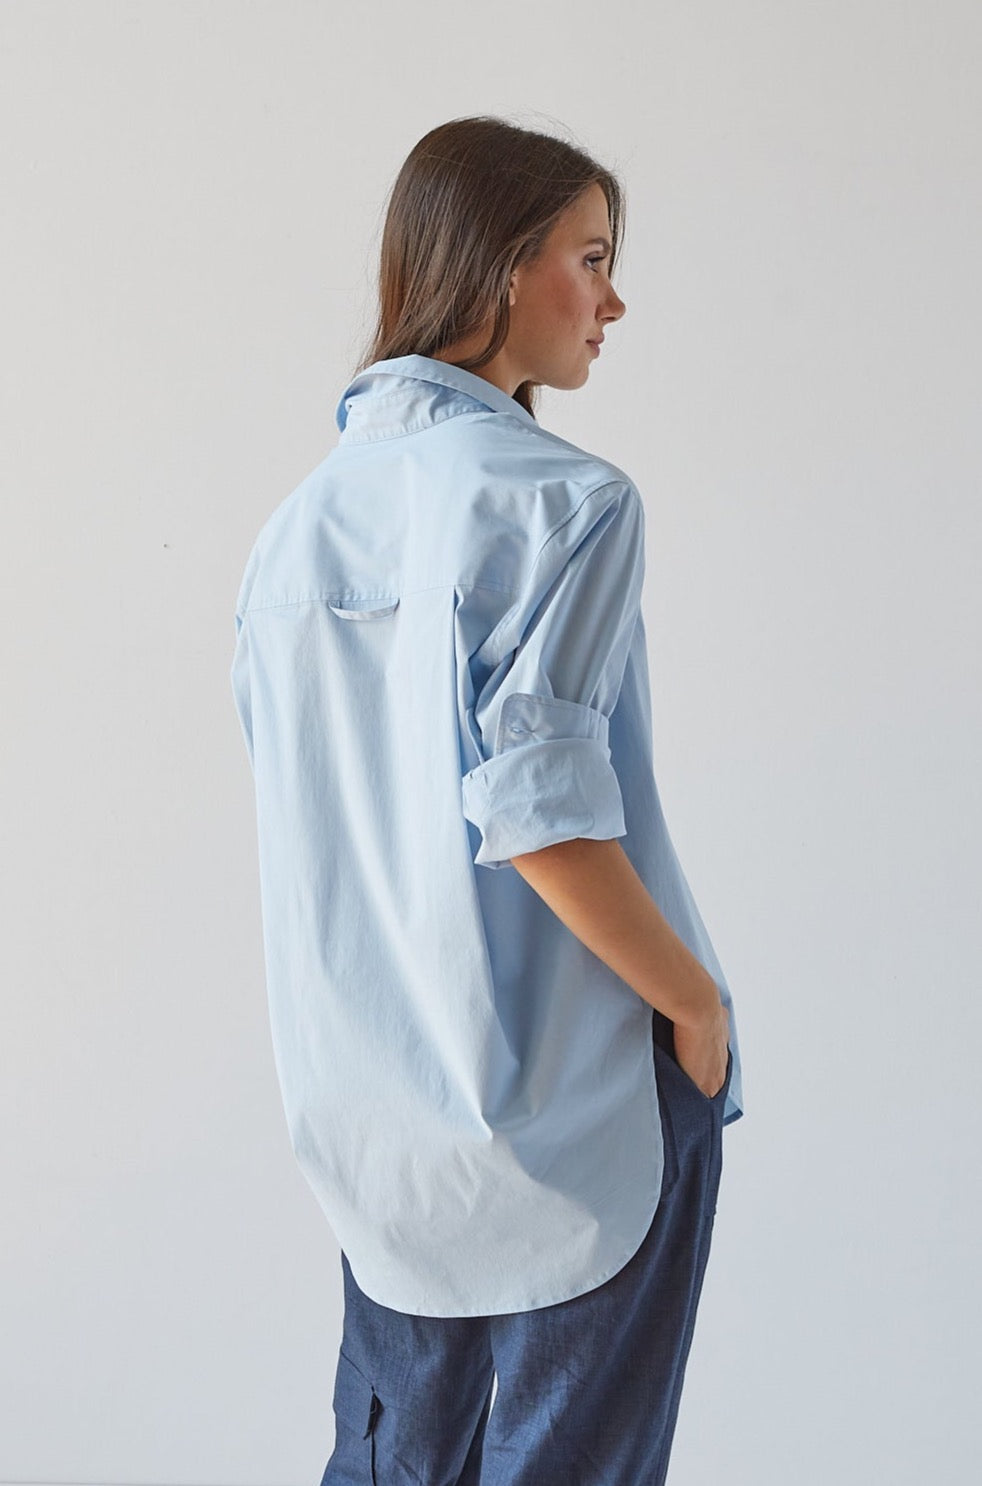 Adroit Atelier Kean Boyfriend Solid Button-Down Shirt in Blue Sky